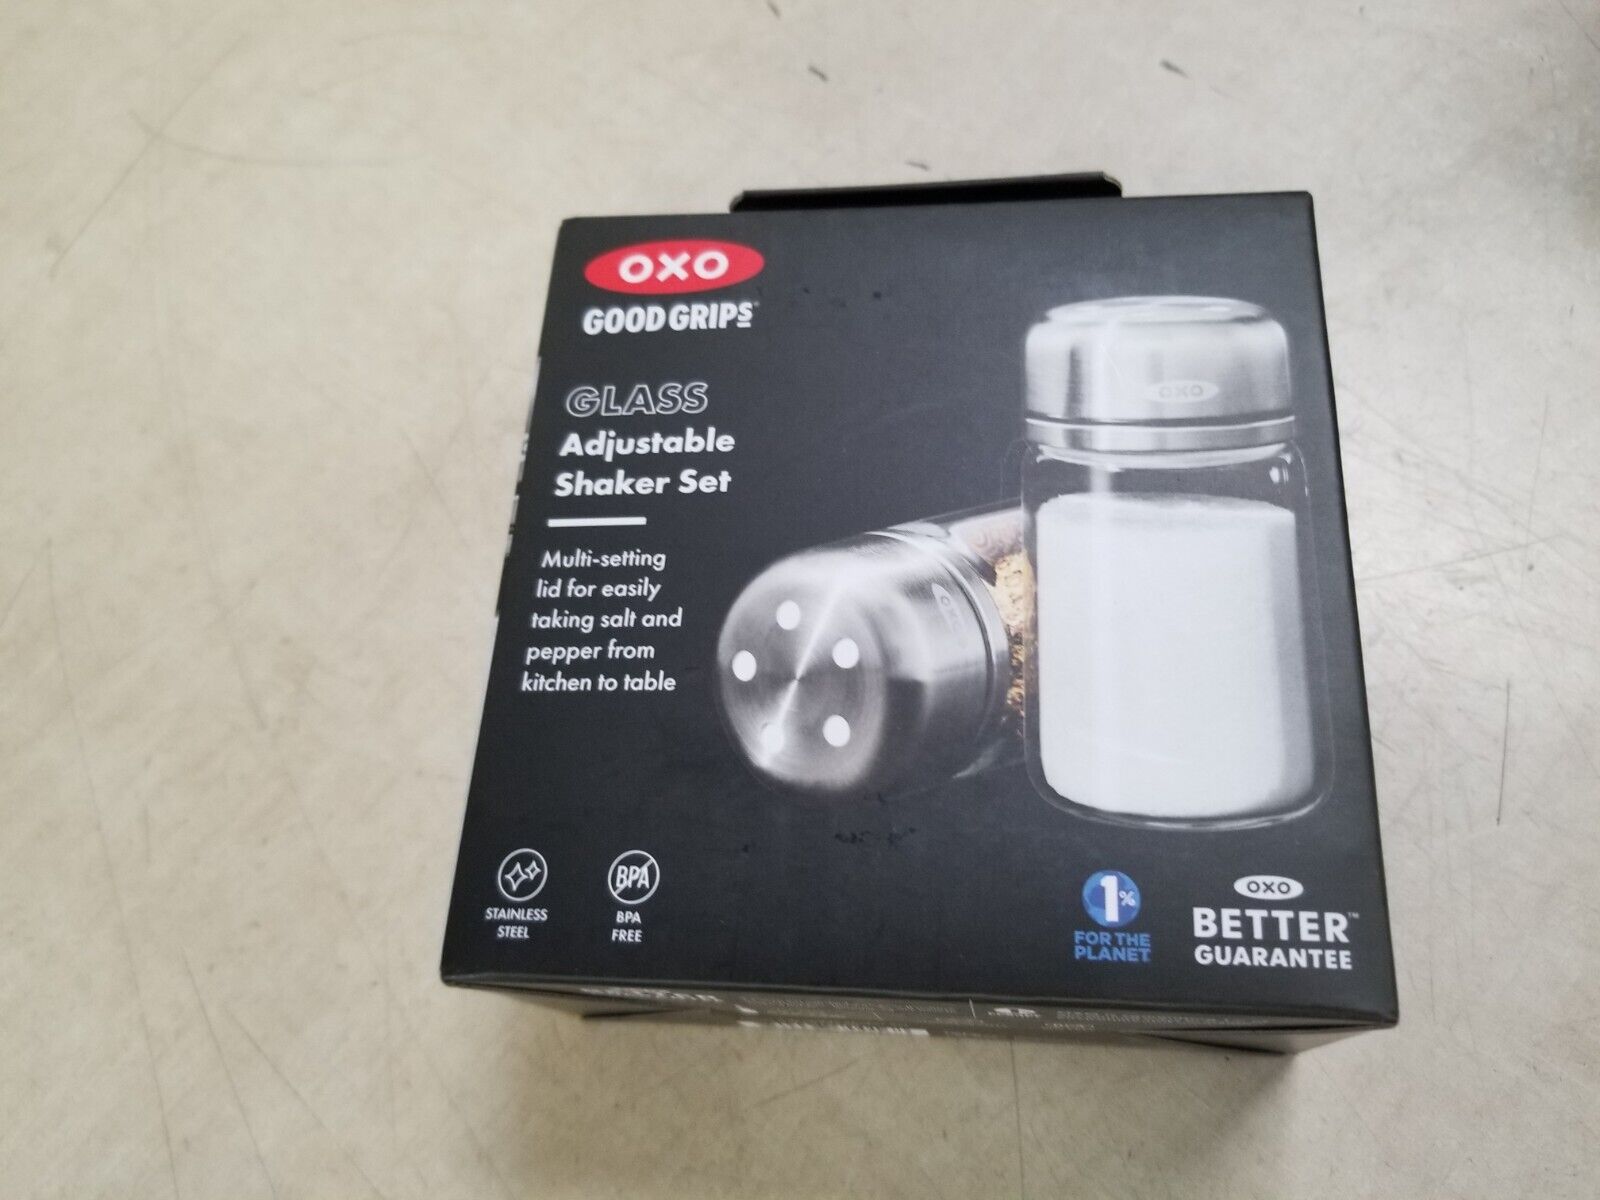 OXO Good Grips Glass Adjustable Shaker Set